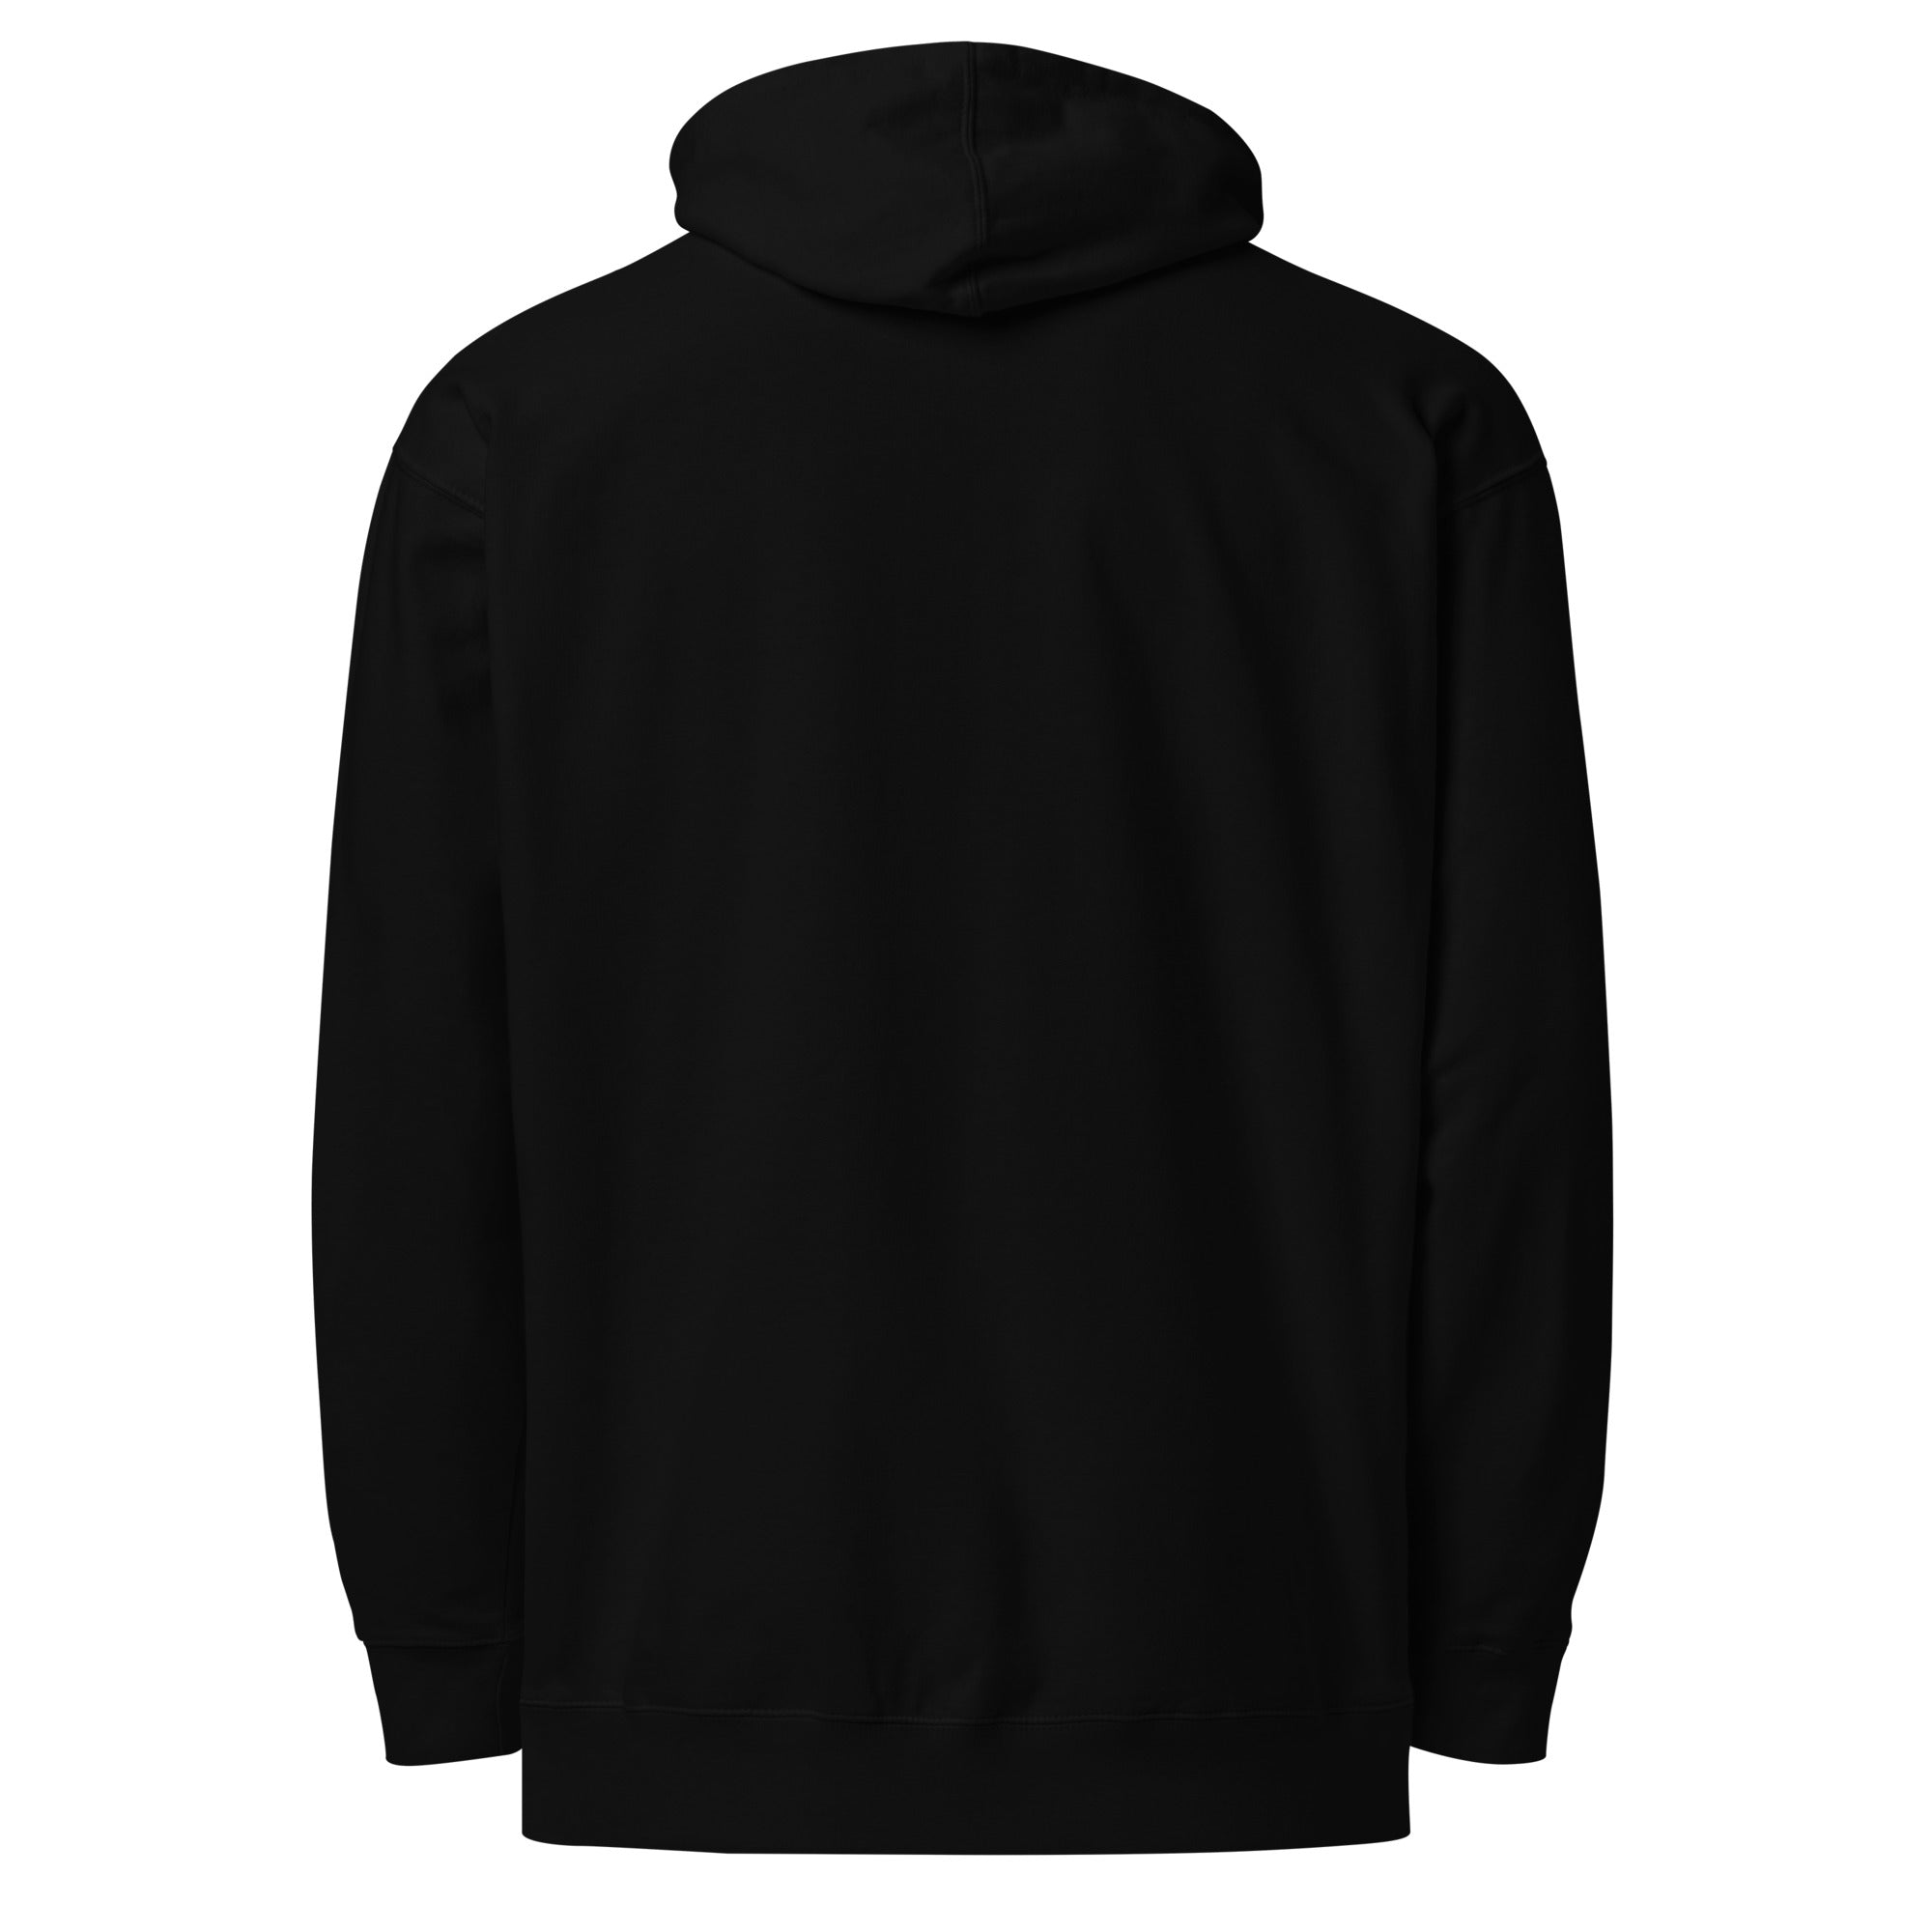 Unisex midweight hoodie